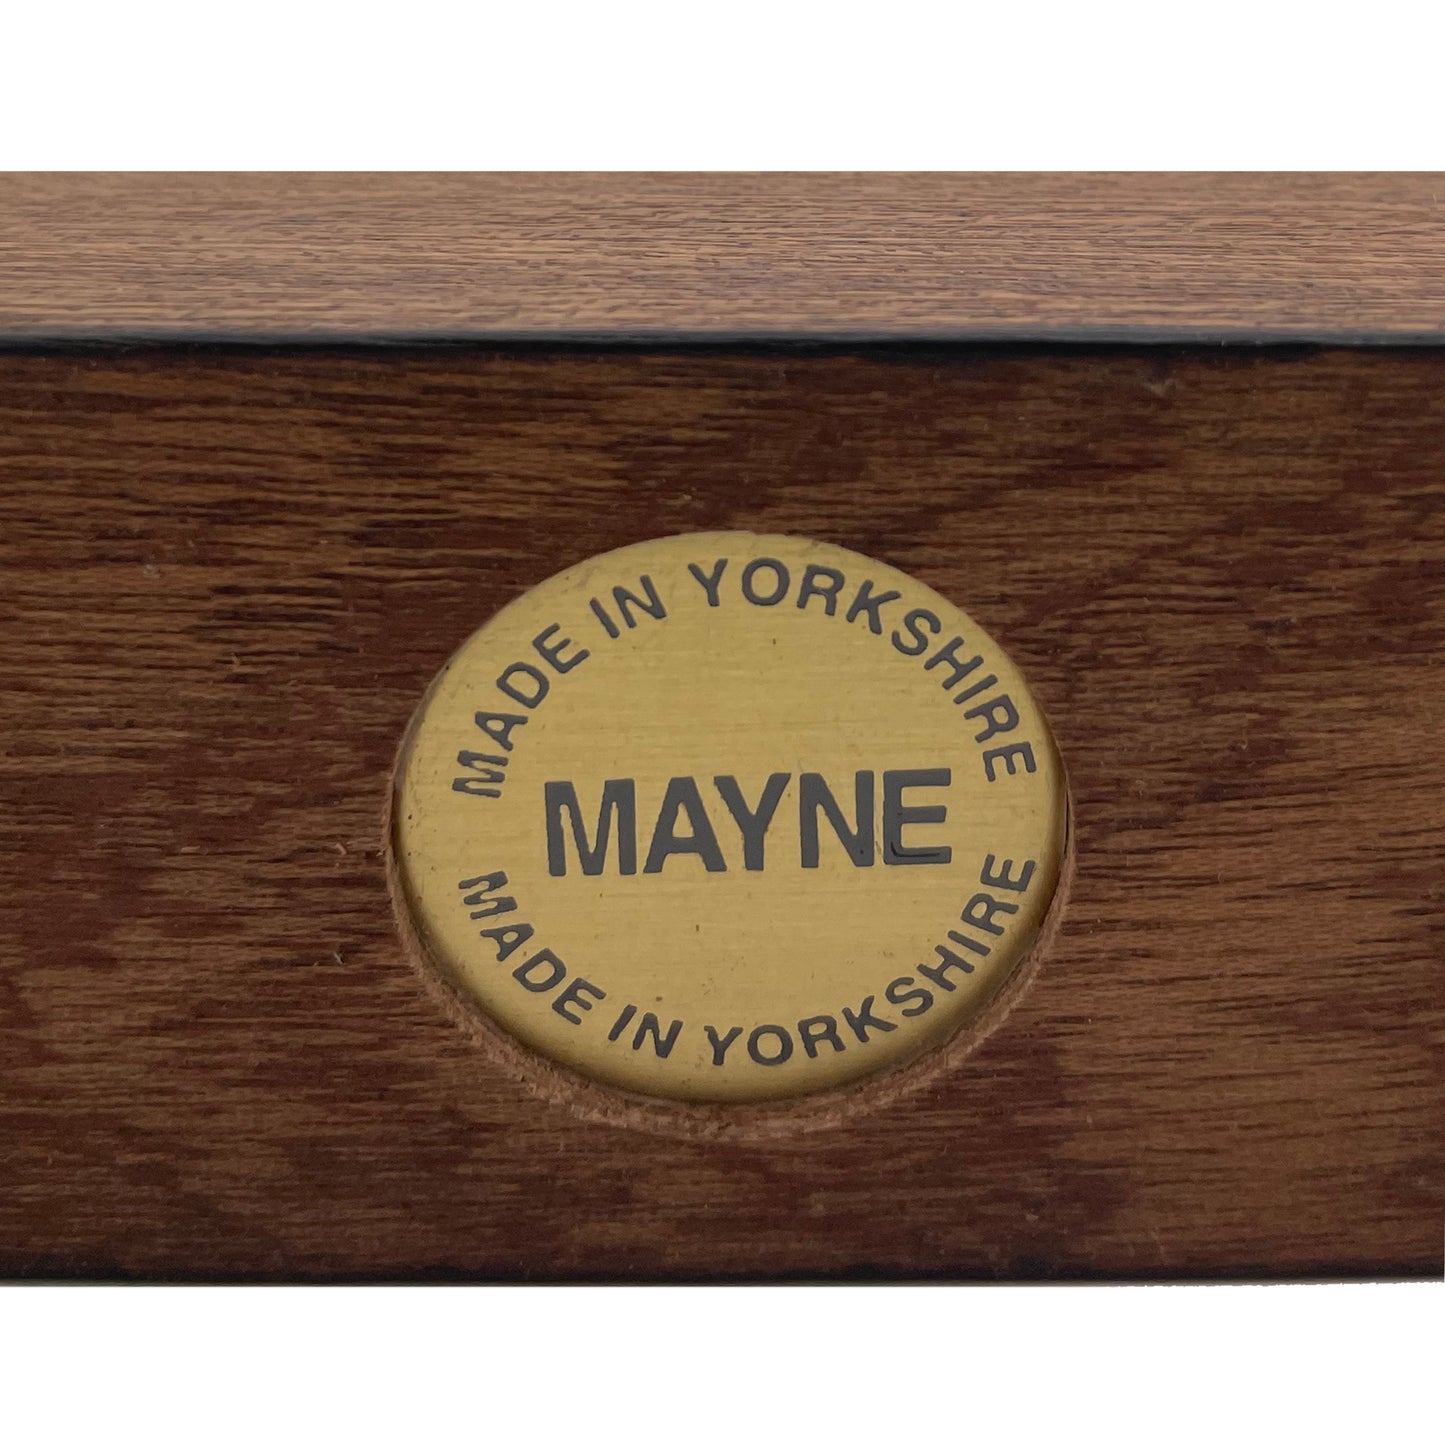 David Mayne Miniatures